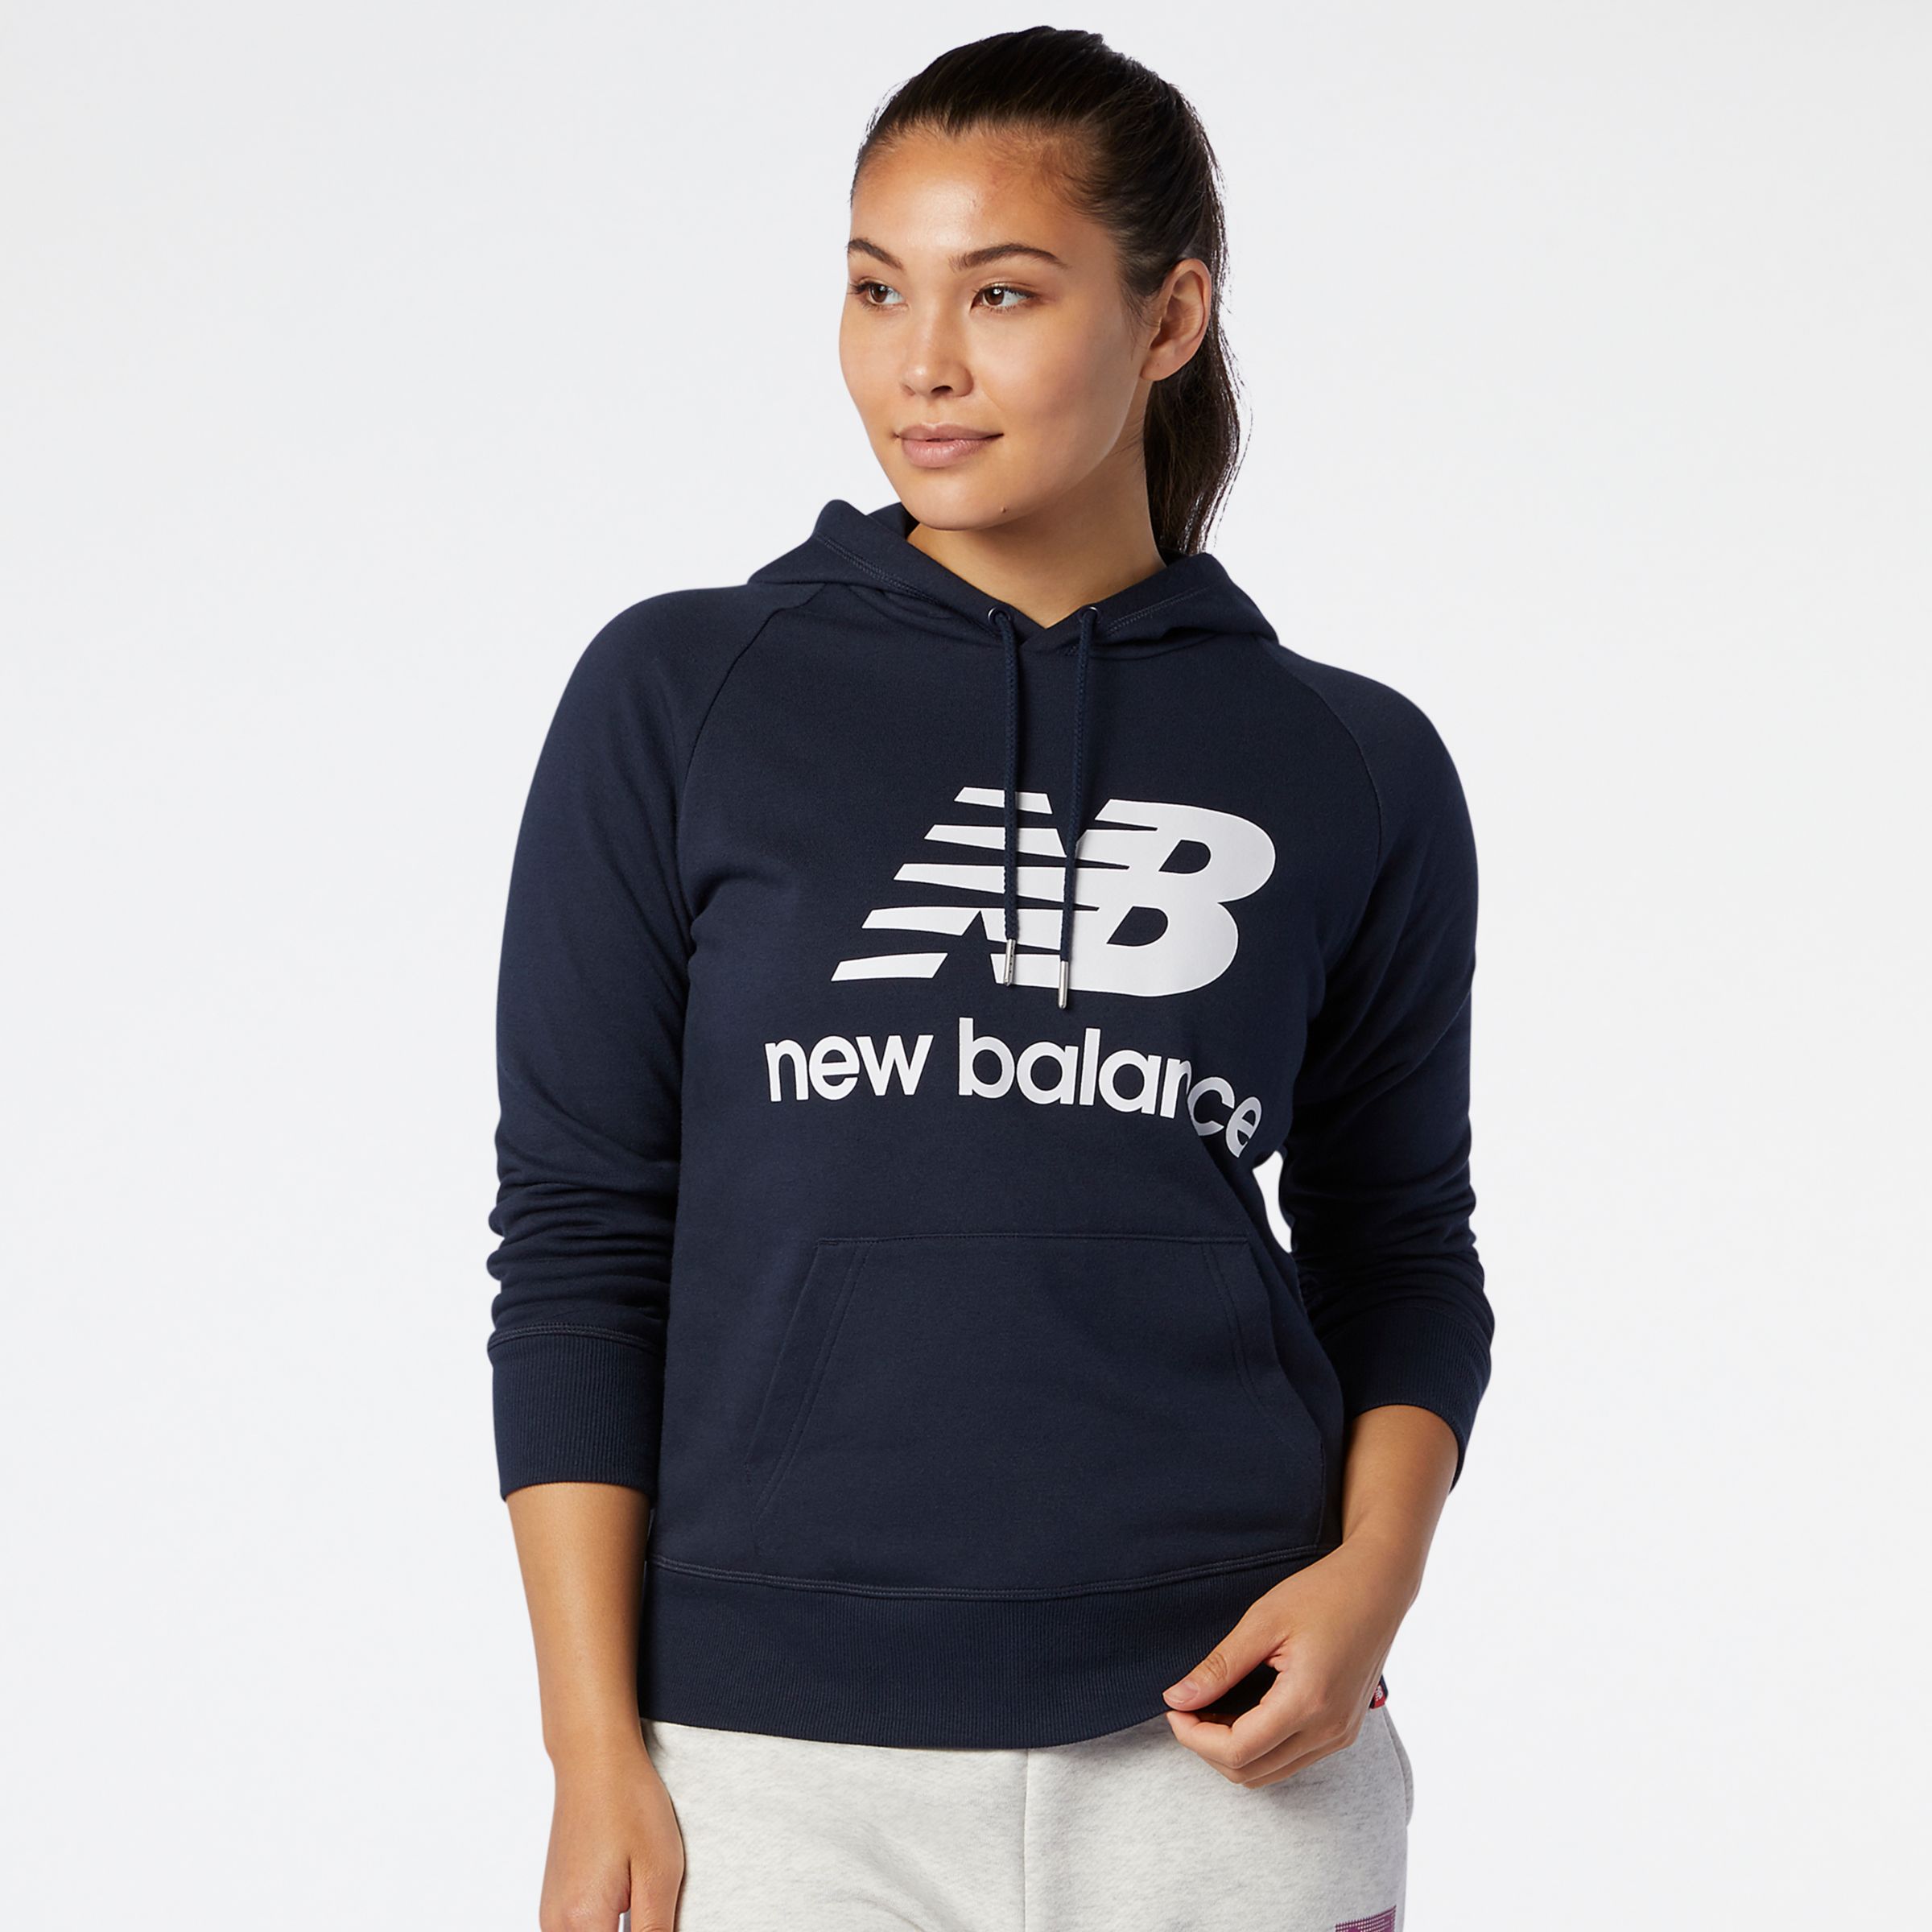 Women's Hoodies \u0026 Sweatshirts - New Balance